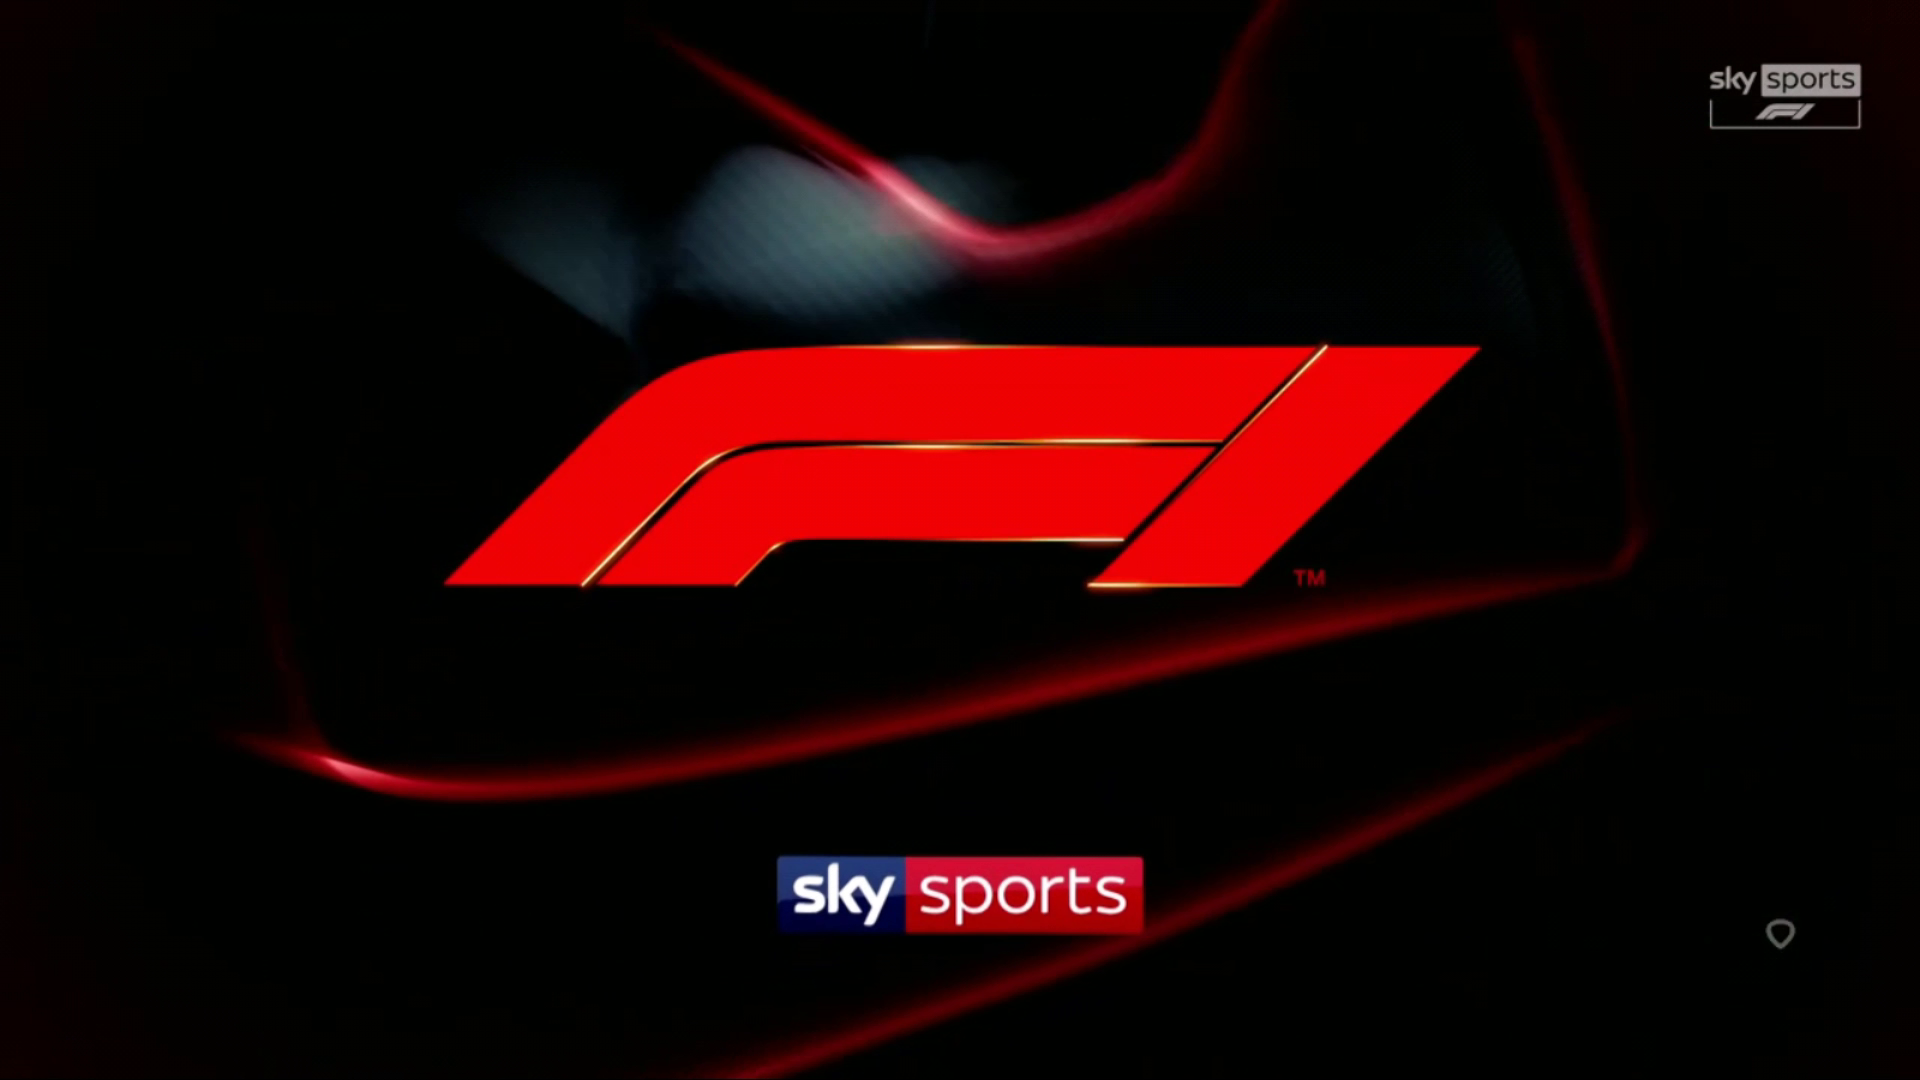 Sky Sports Formule 1 - 2021 Race 12 - Belgie - The F1 Show - 1080p